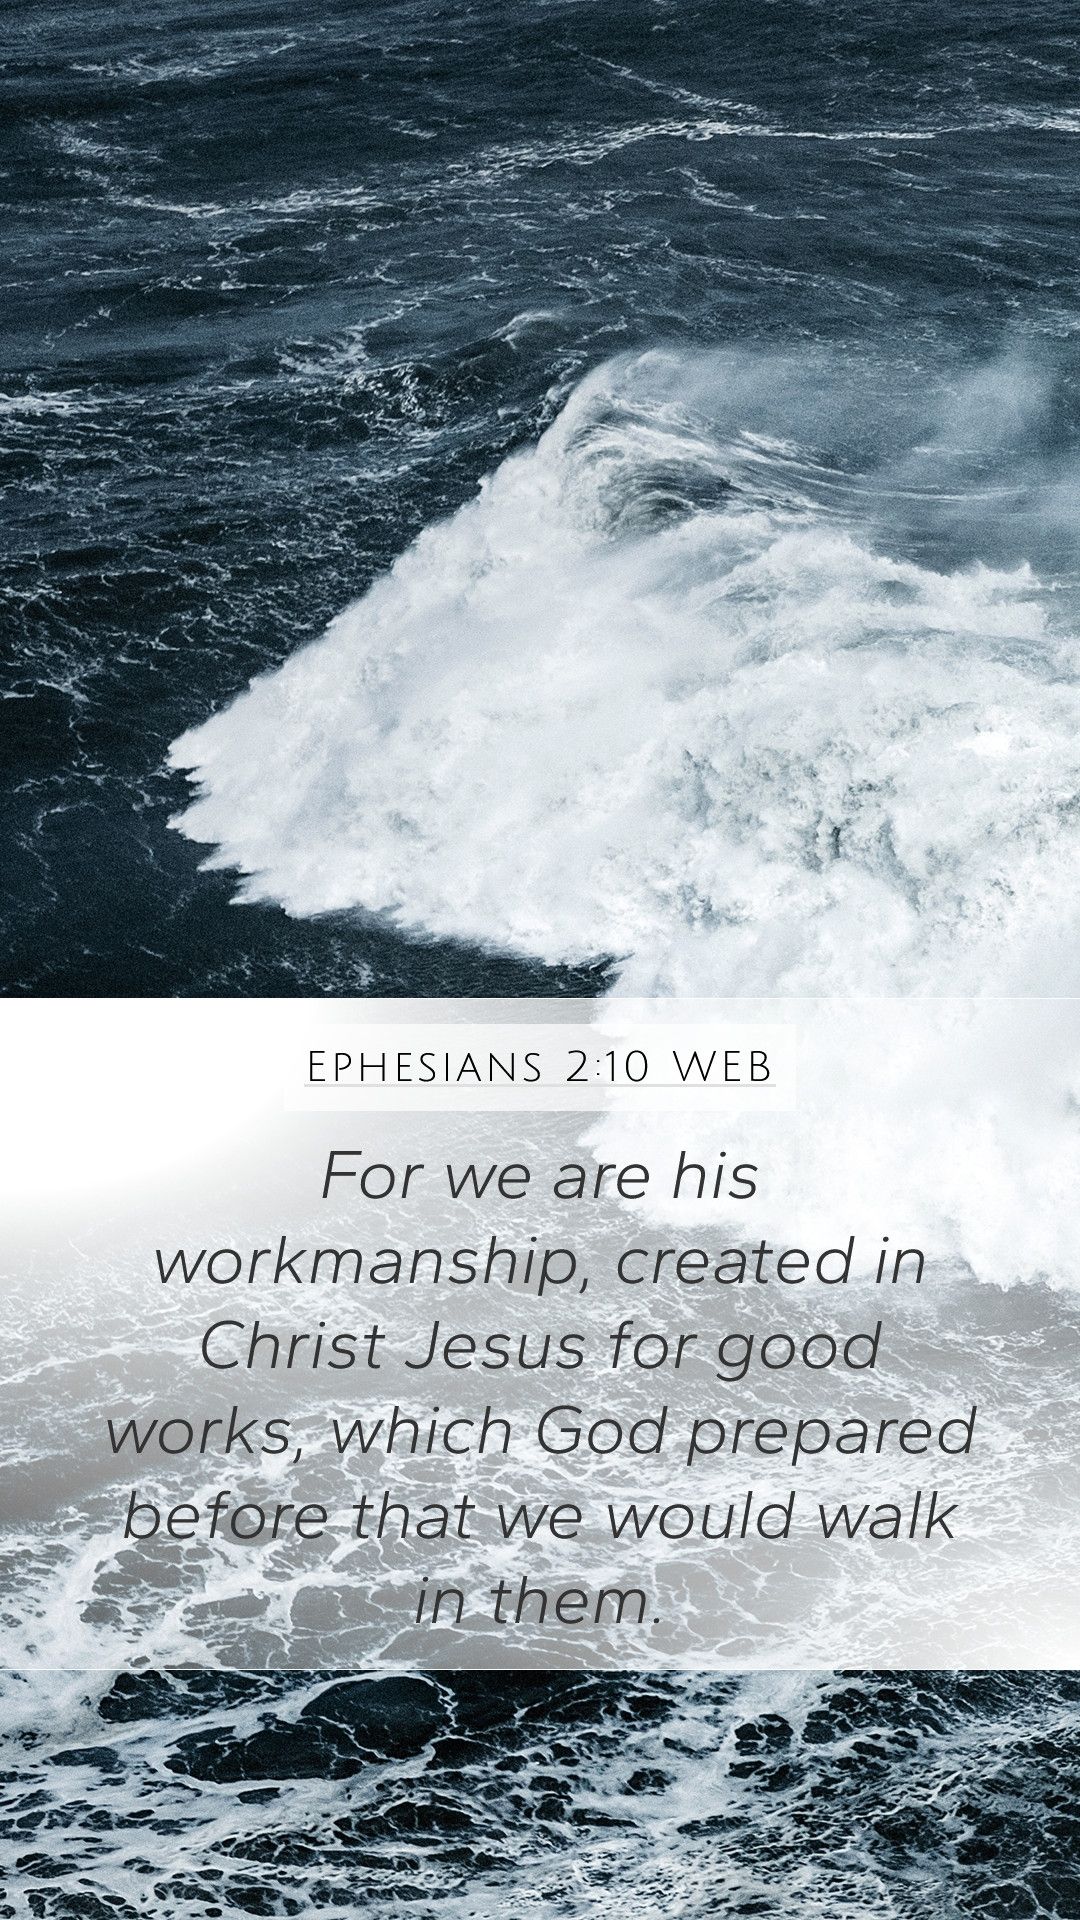  Jesus Christus Hintergrundbild 1080x1920. Ephesians 2:10 WEB Mobile Phone Wallpaper we are his workmanship, created in Christ